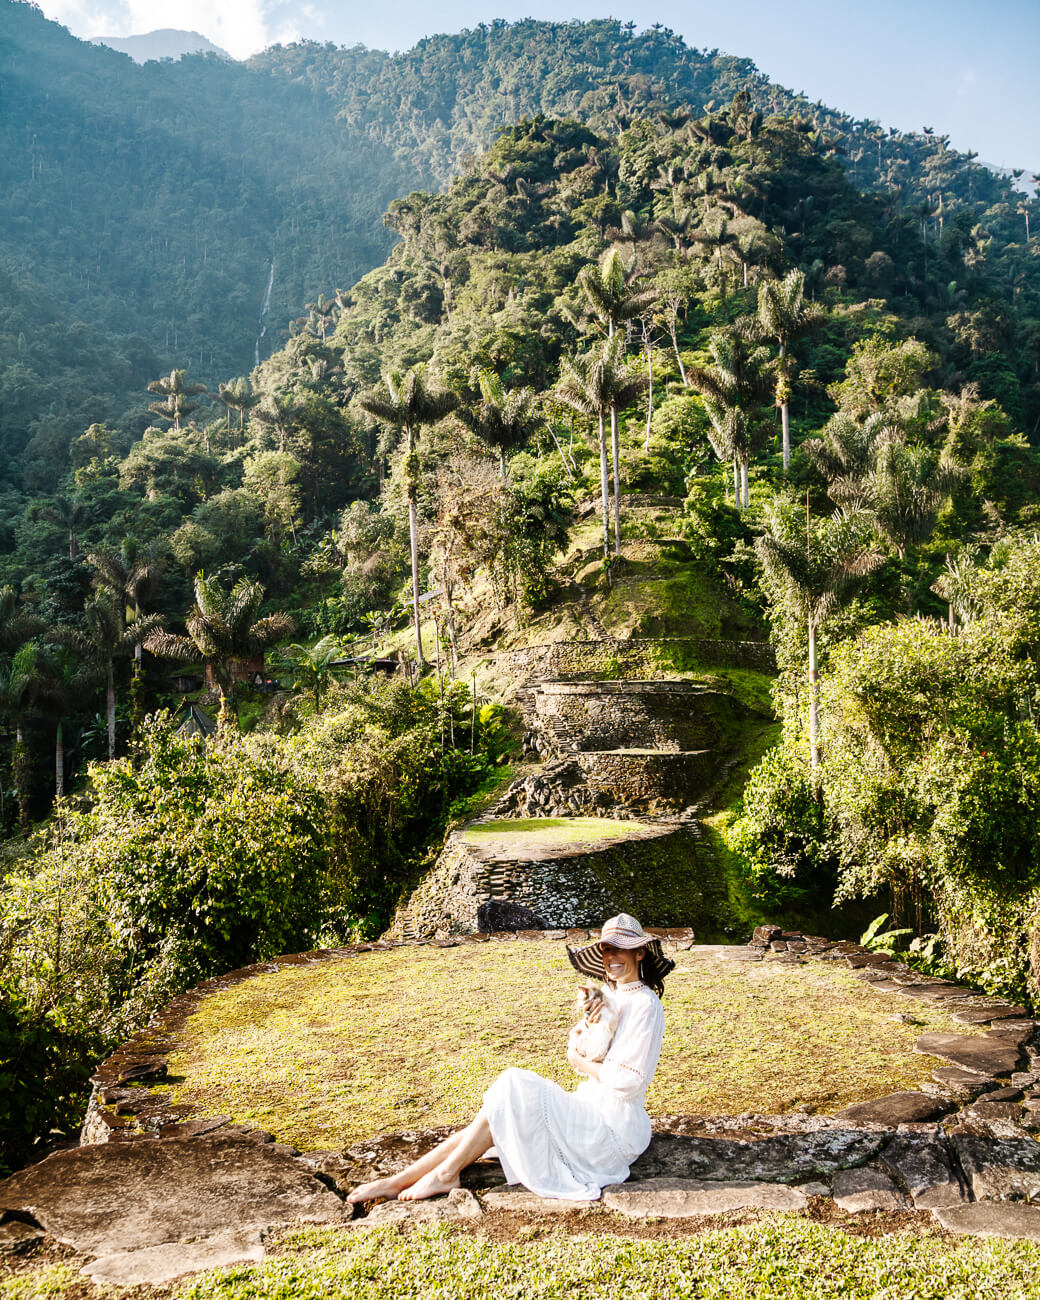 Deborah posing in front of Lost City in Colombia